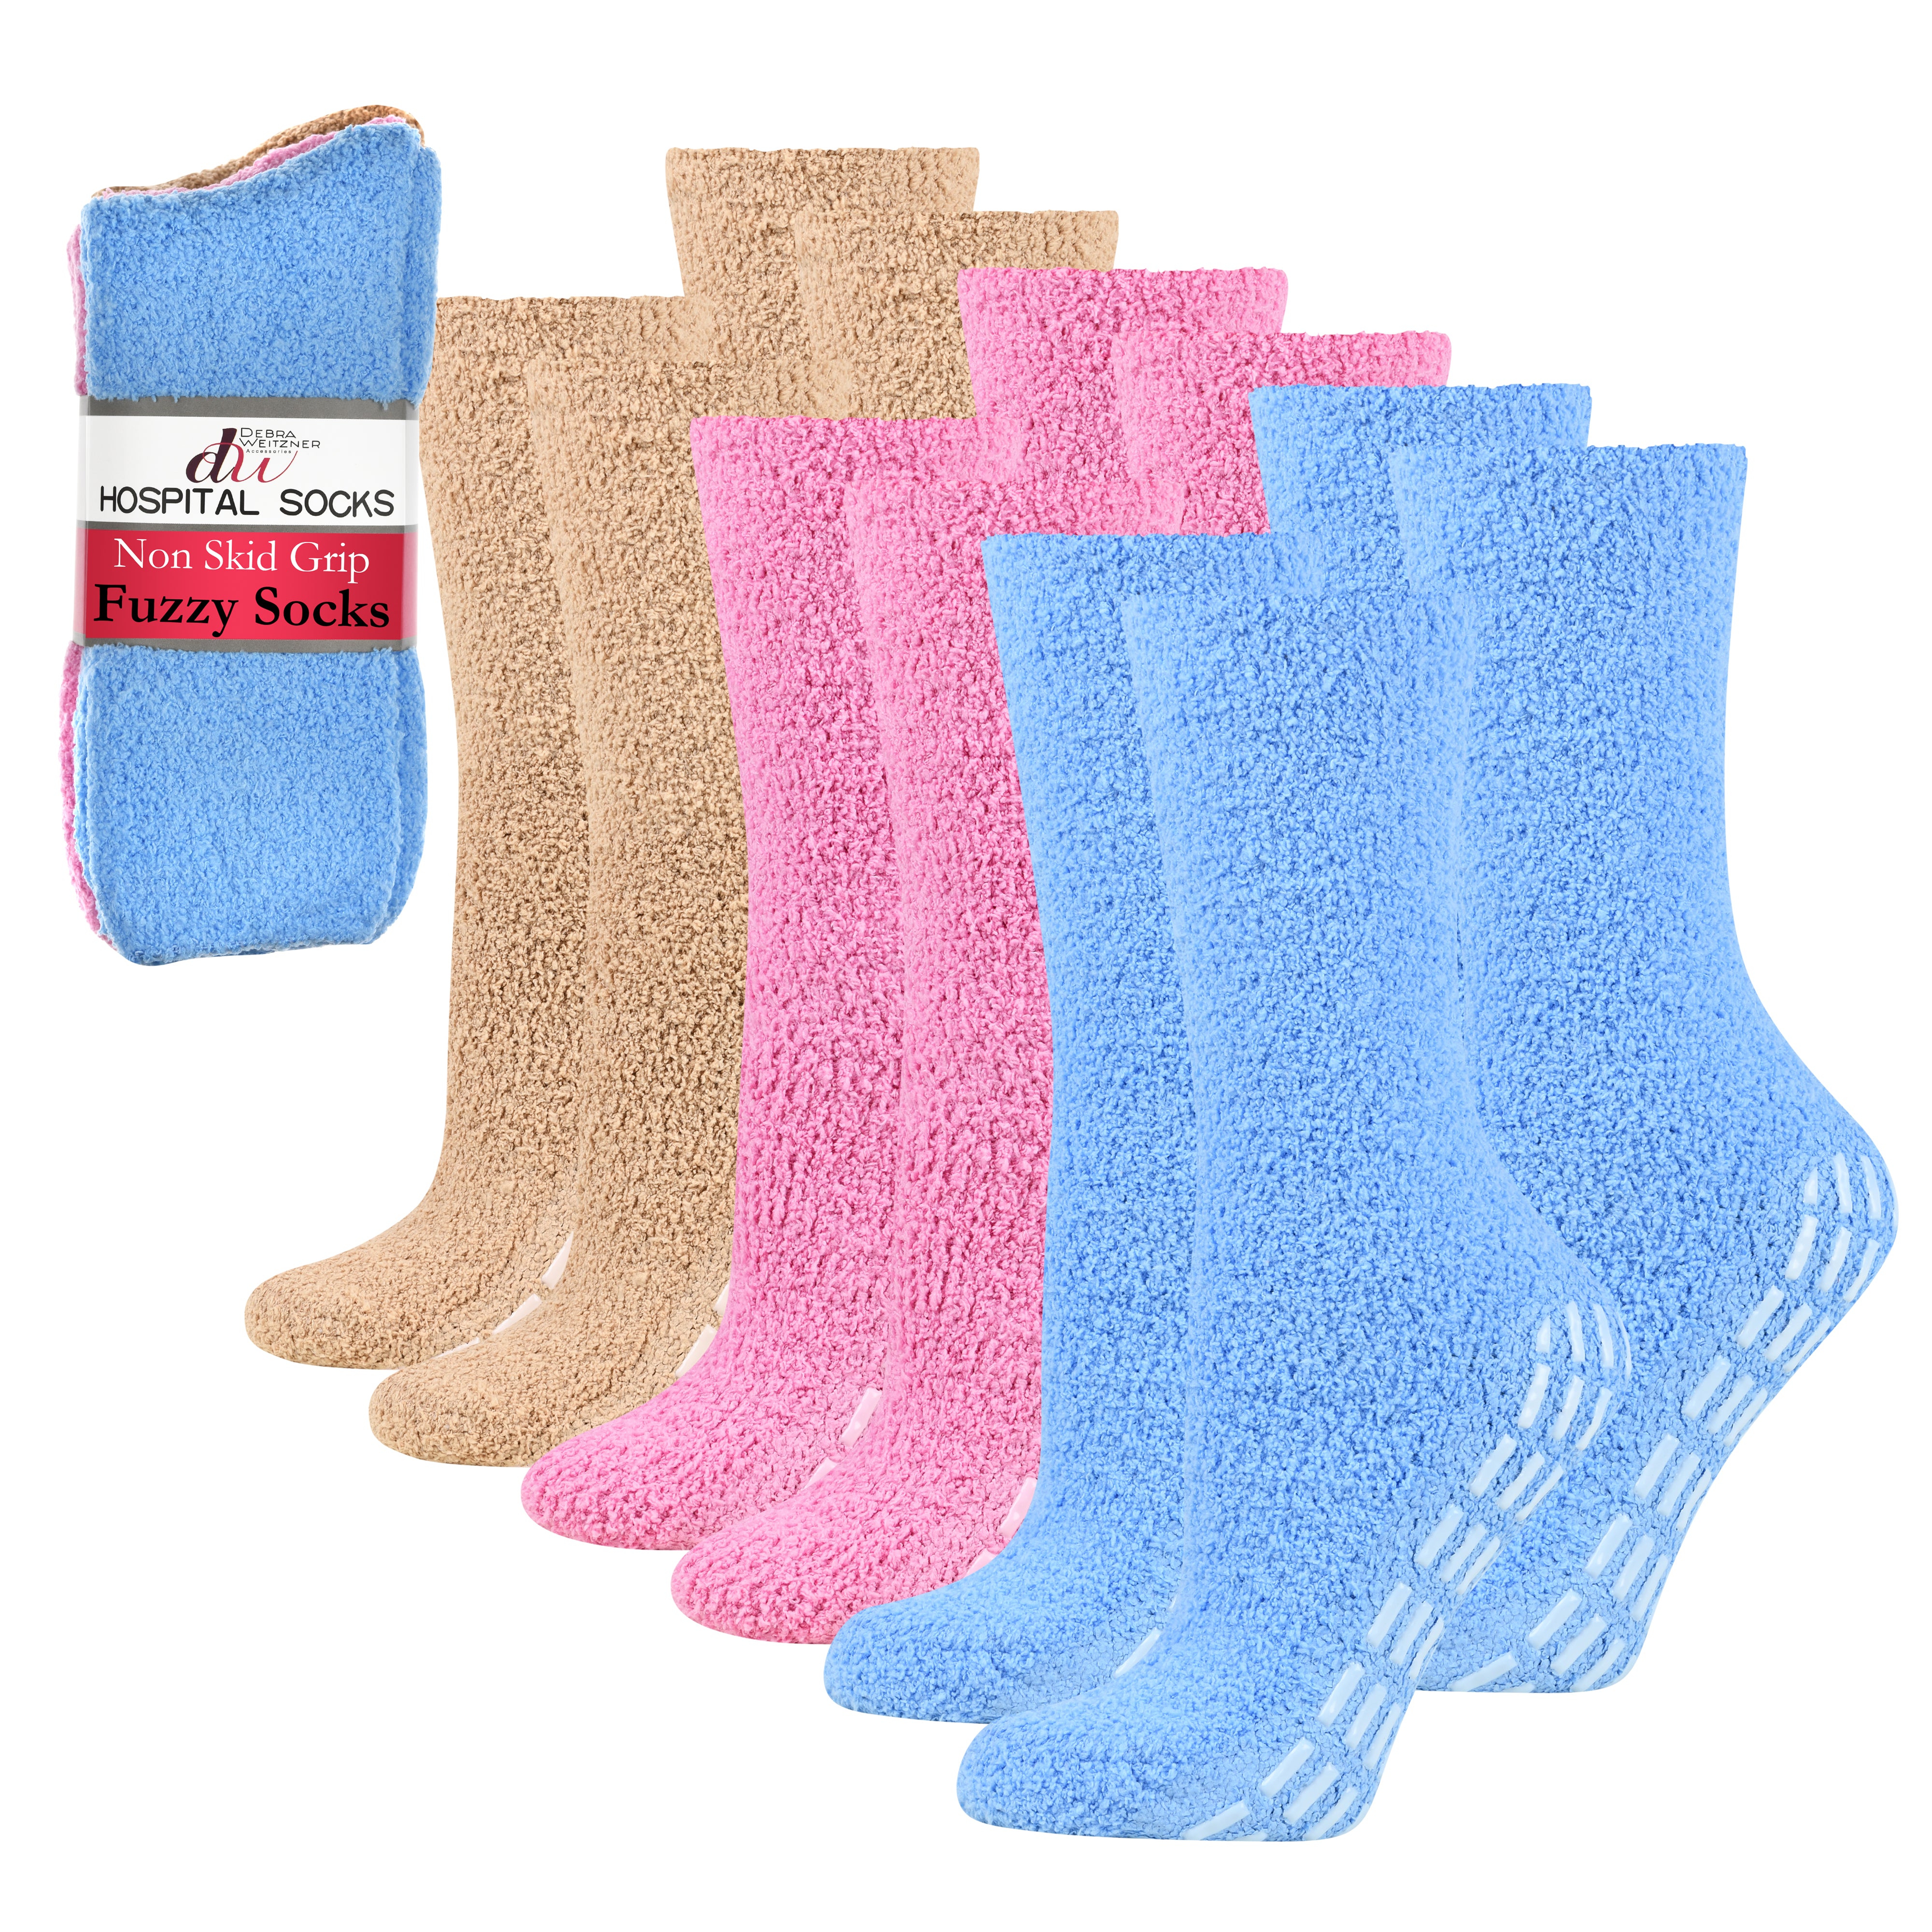 Non-slip Hospital Slipper Socks, Cozy Fuzzy Socks